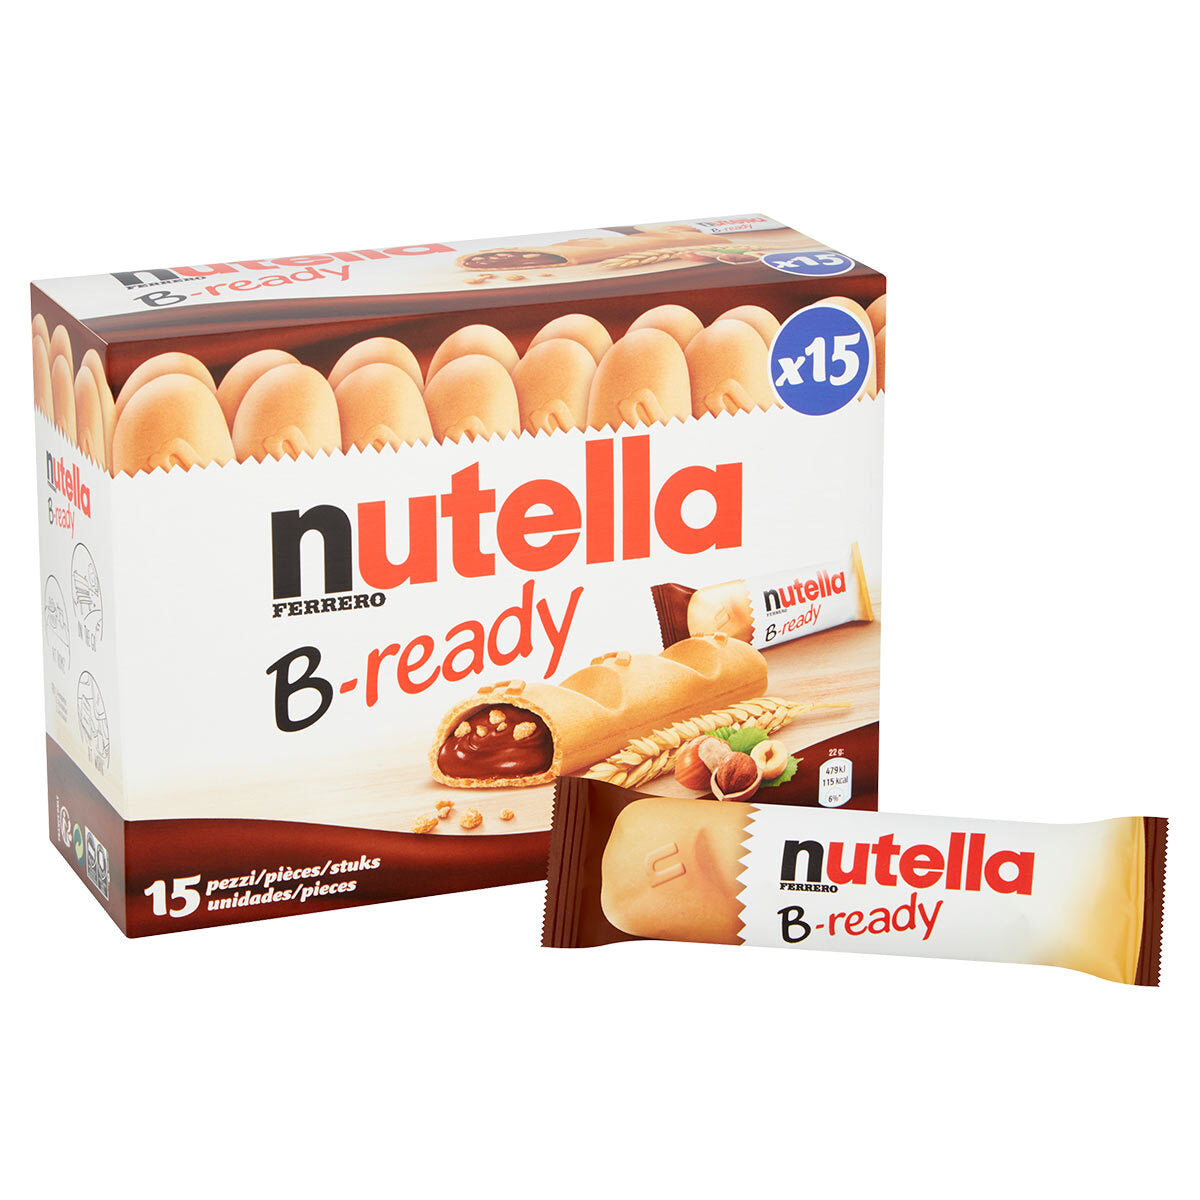 Nutella B-Ready 15 x 22g: A Crunchy Hazelnut Bliss in Every Bite